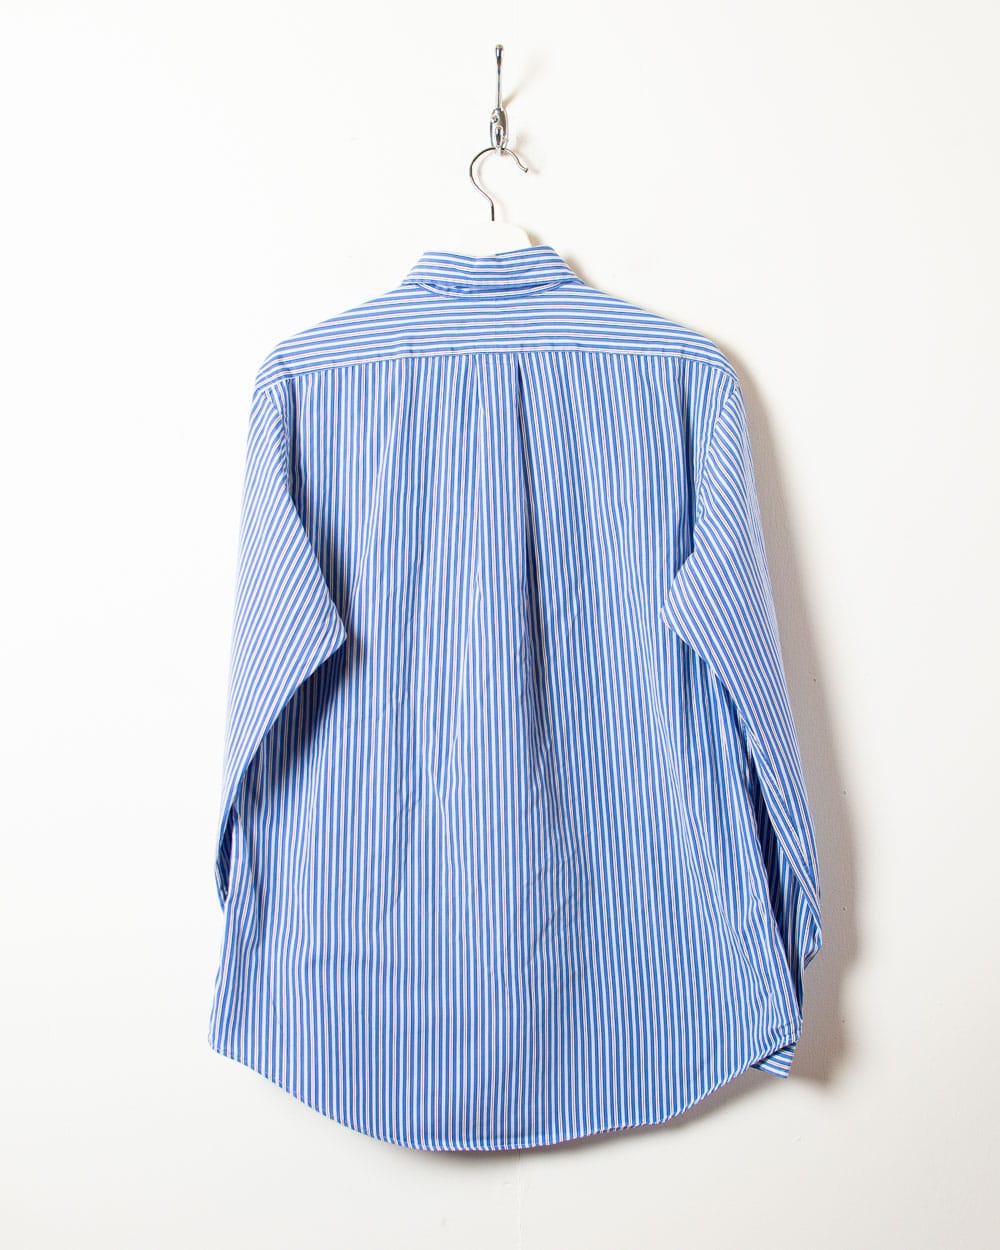 BabyBlue Polo Ralph Lauren Striped Shirt - Large